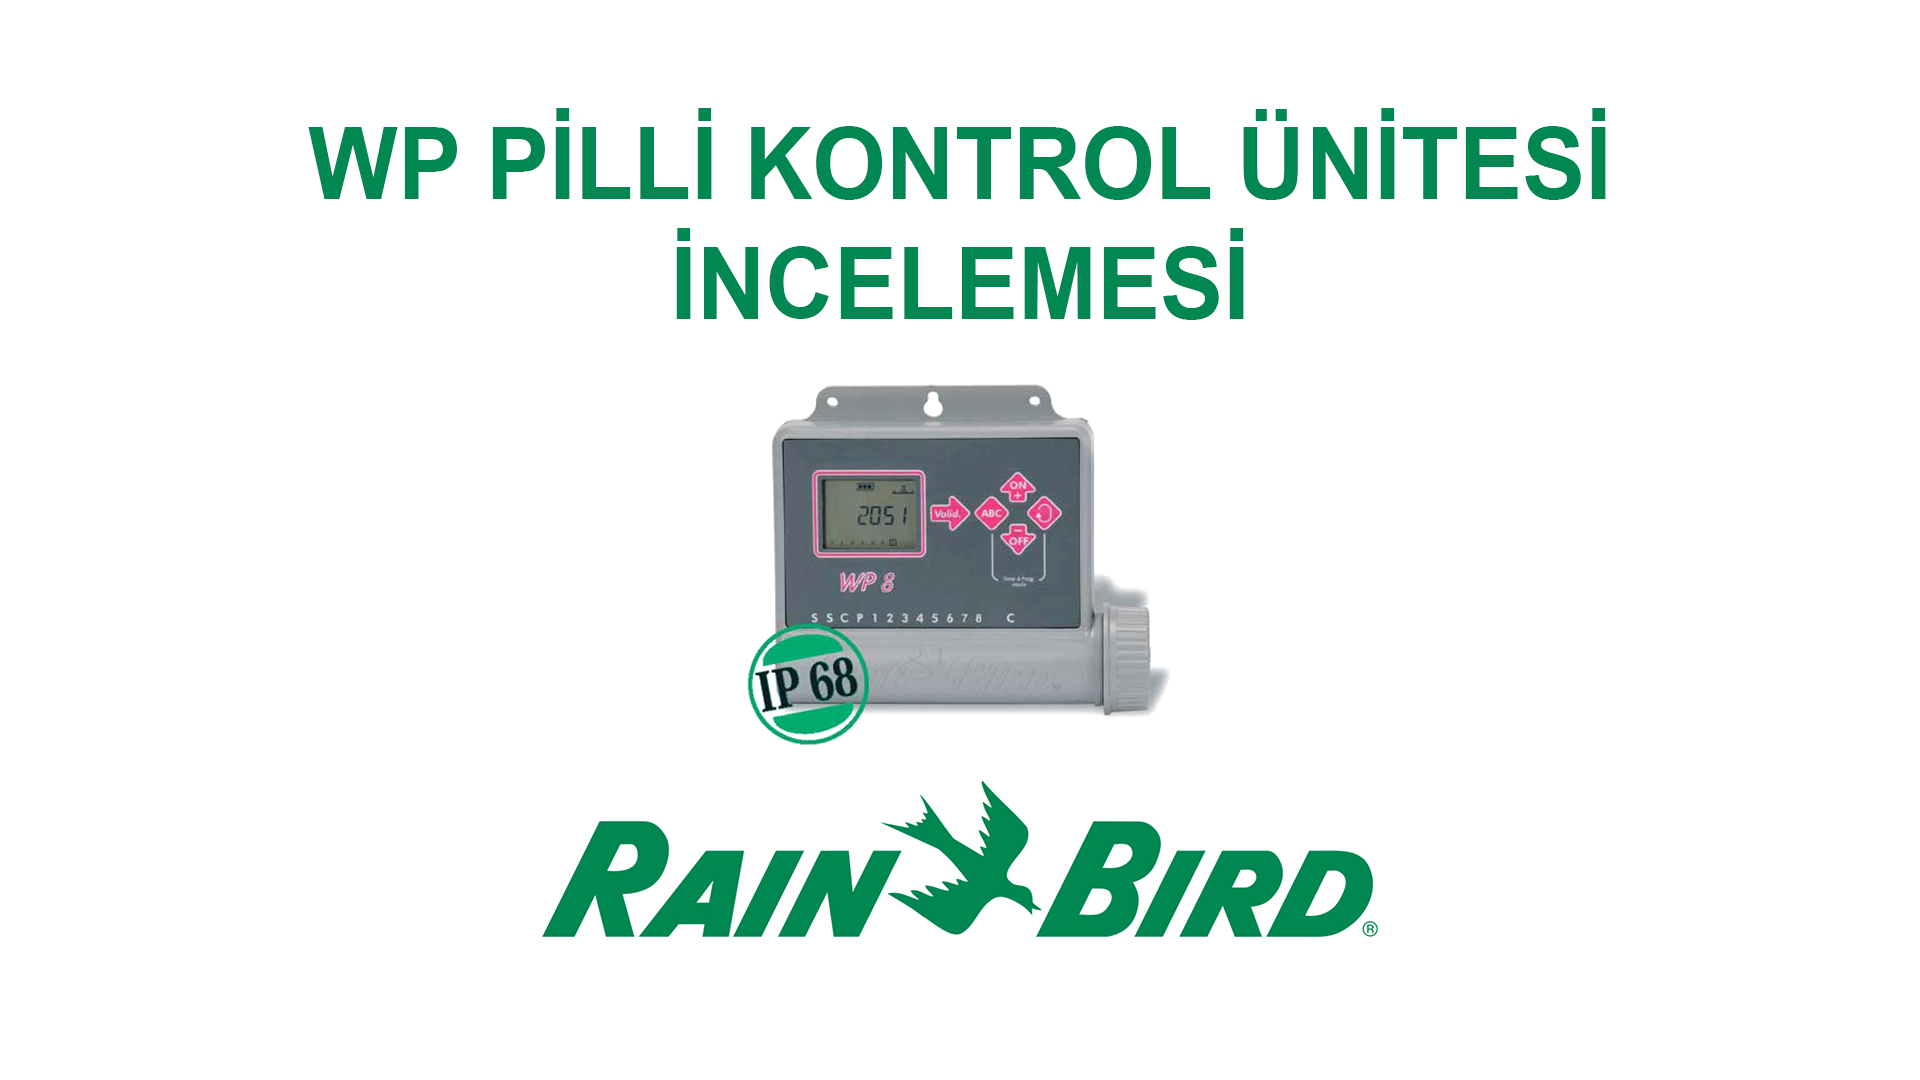 Rainbird WP Pilli Kontrol Ünitesi